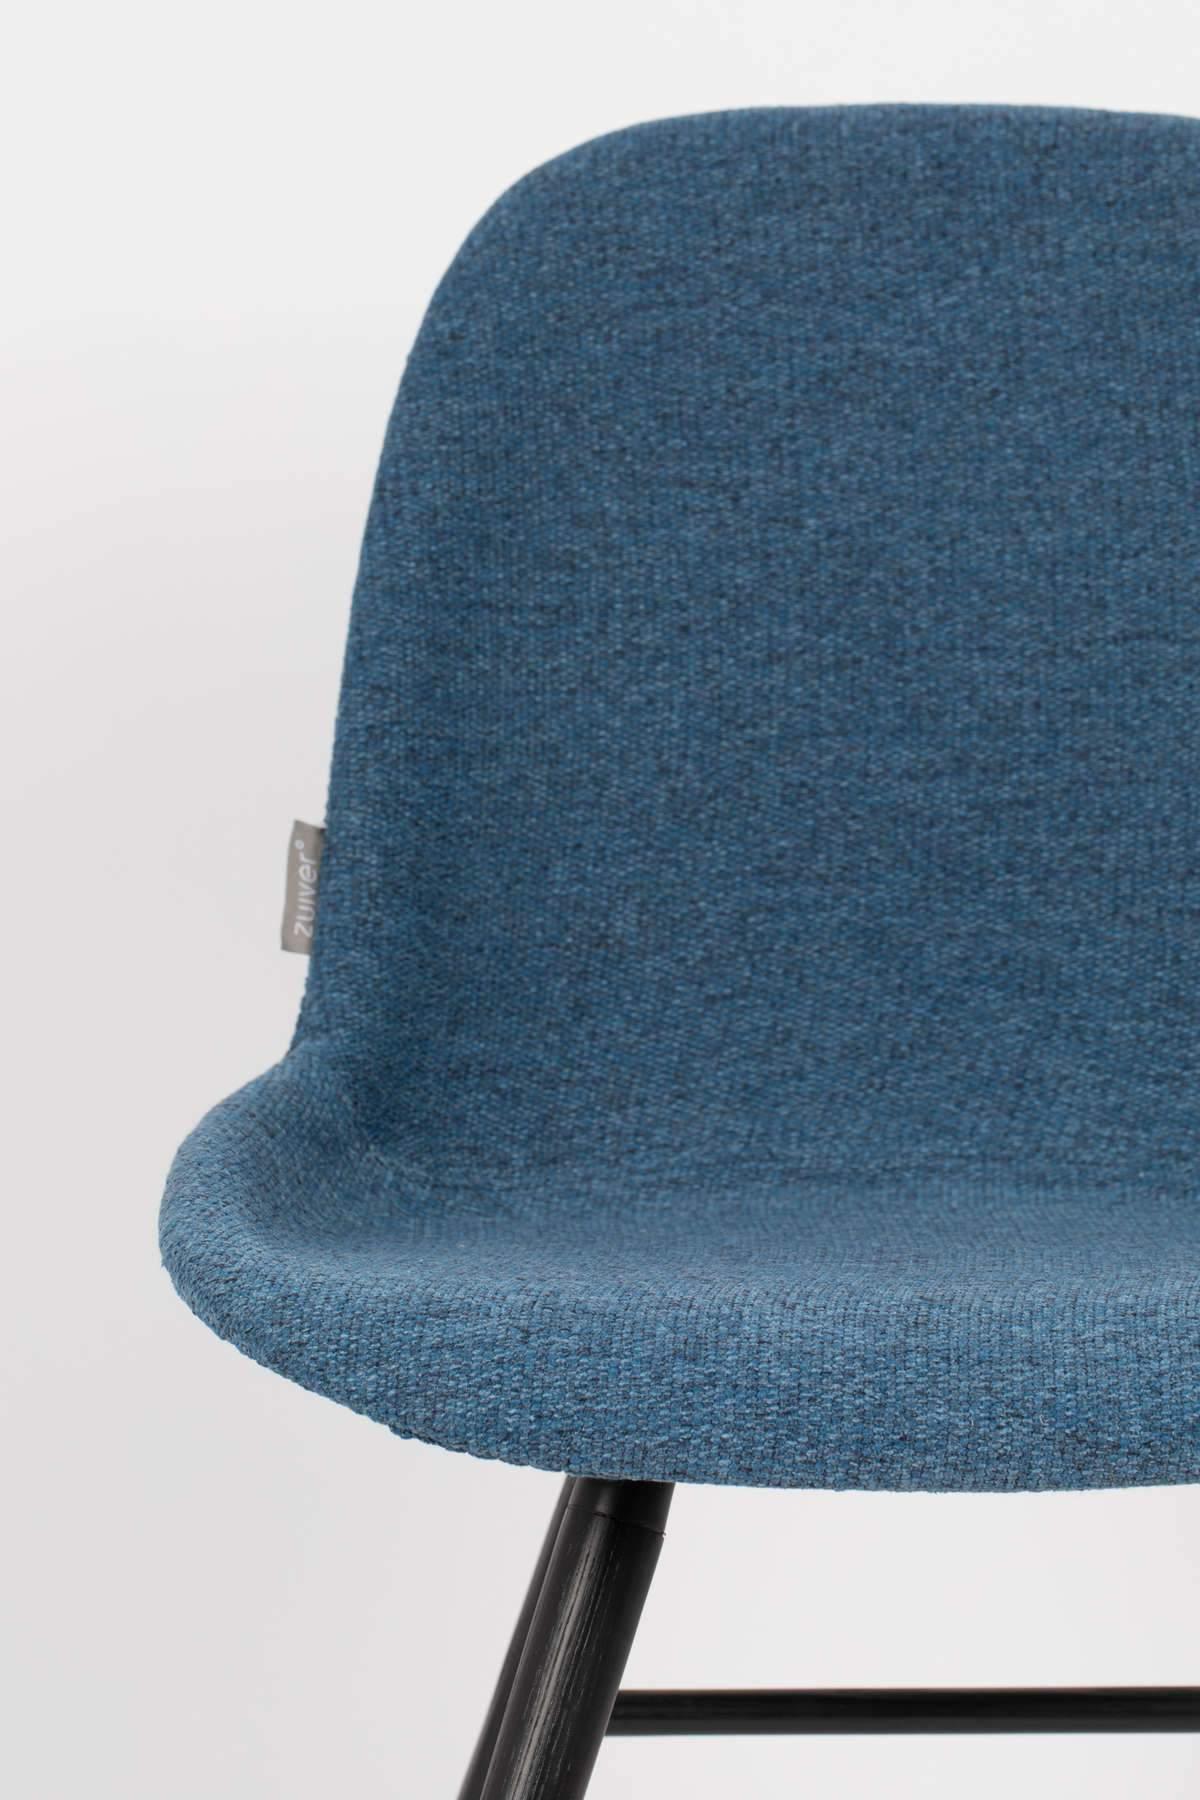 Krzesło ALBERT KUIP SOFT niebieski Zuiver    Eye on Design